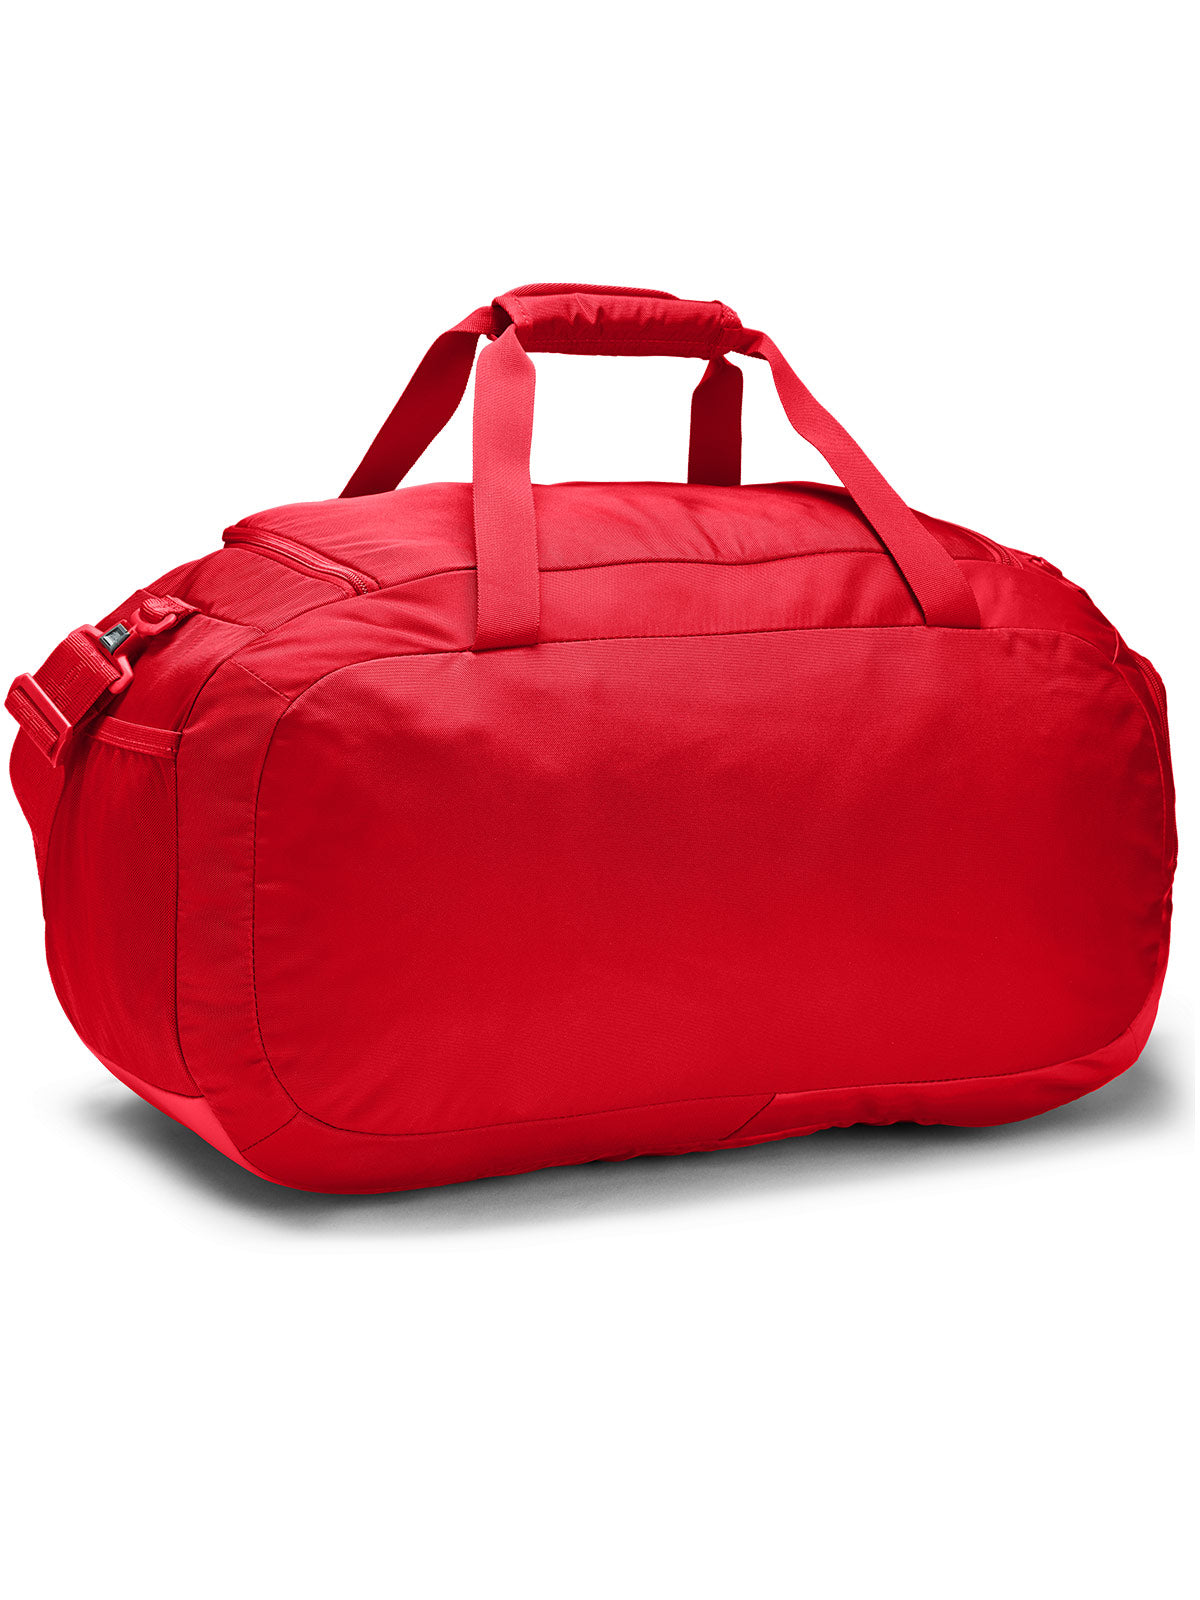 UA Undeniable Duffle 4.0 Medium Duffle Bag